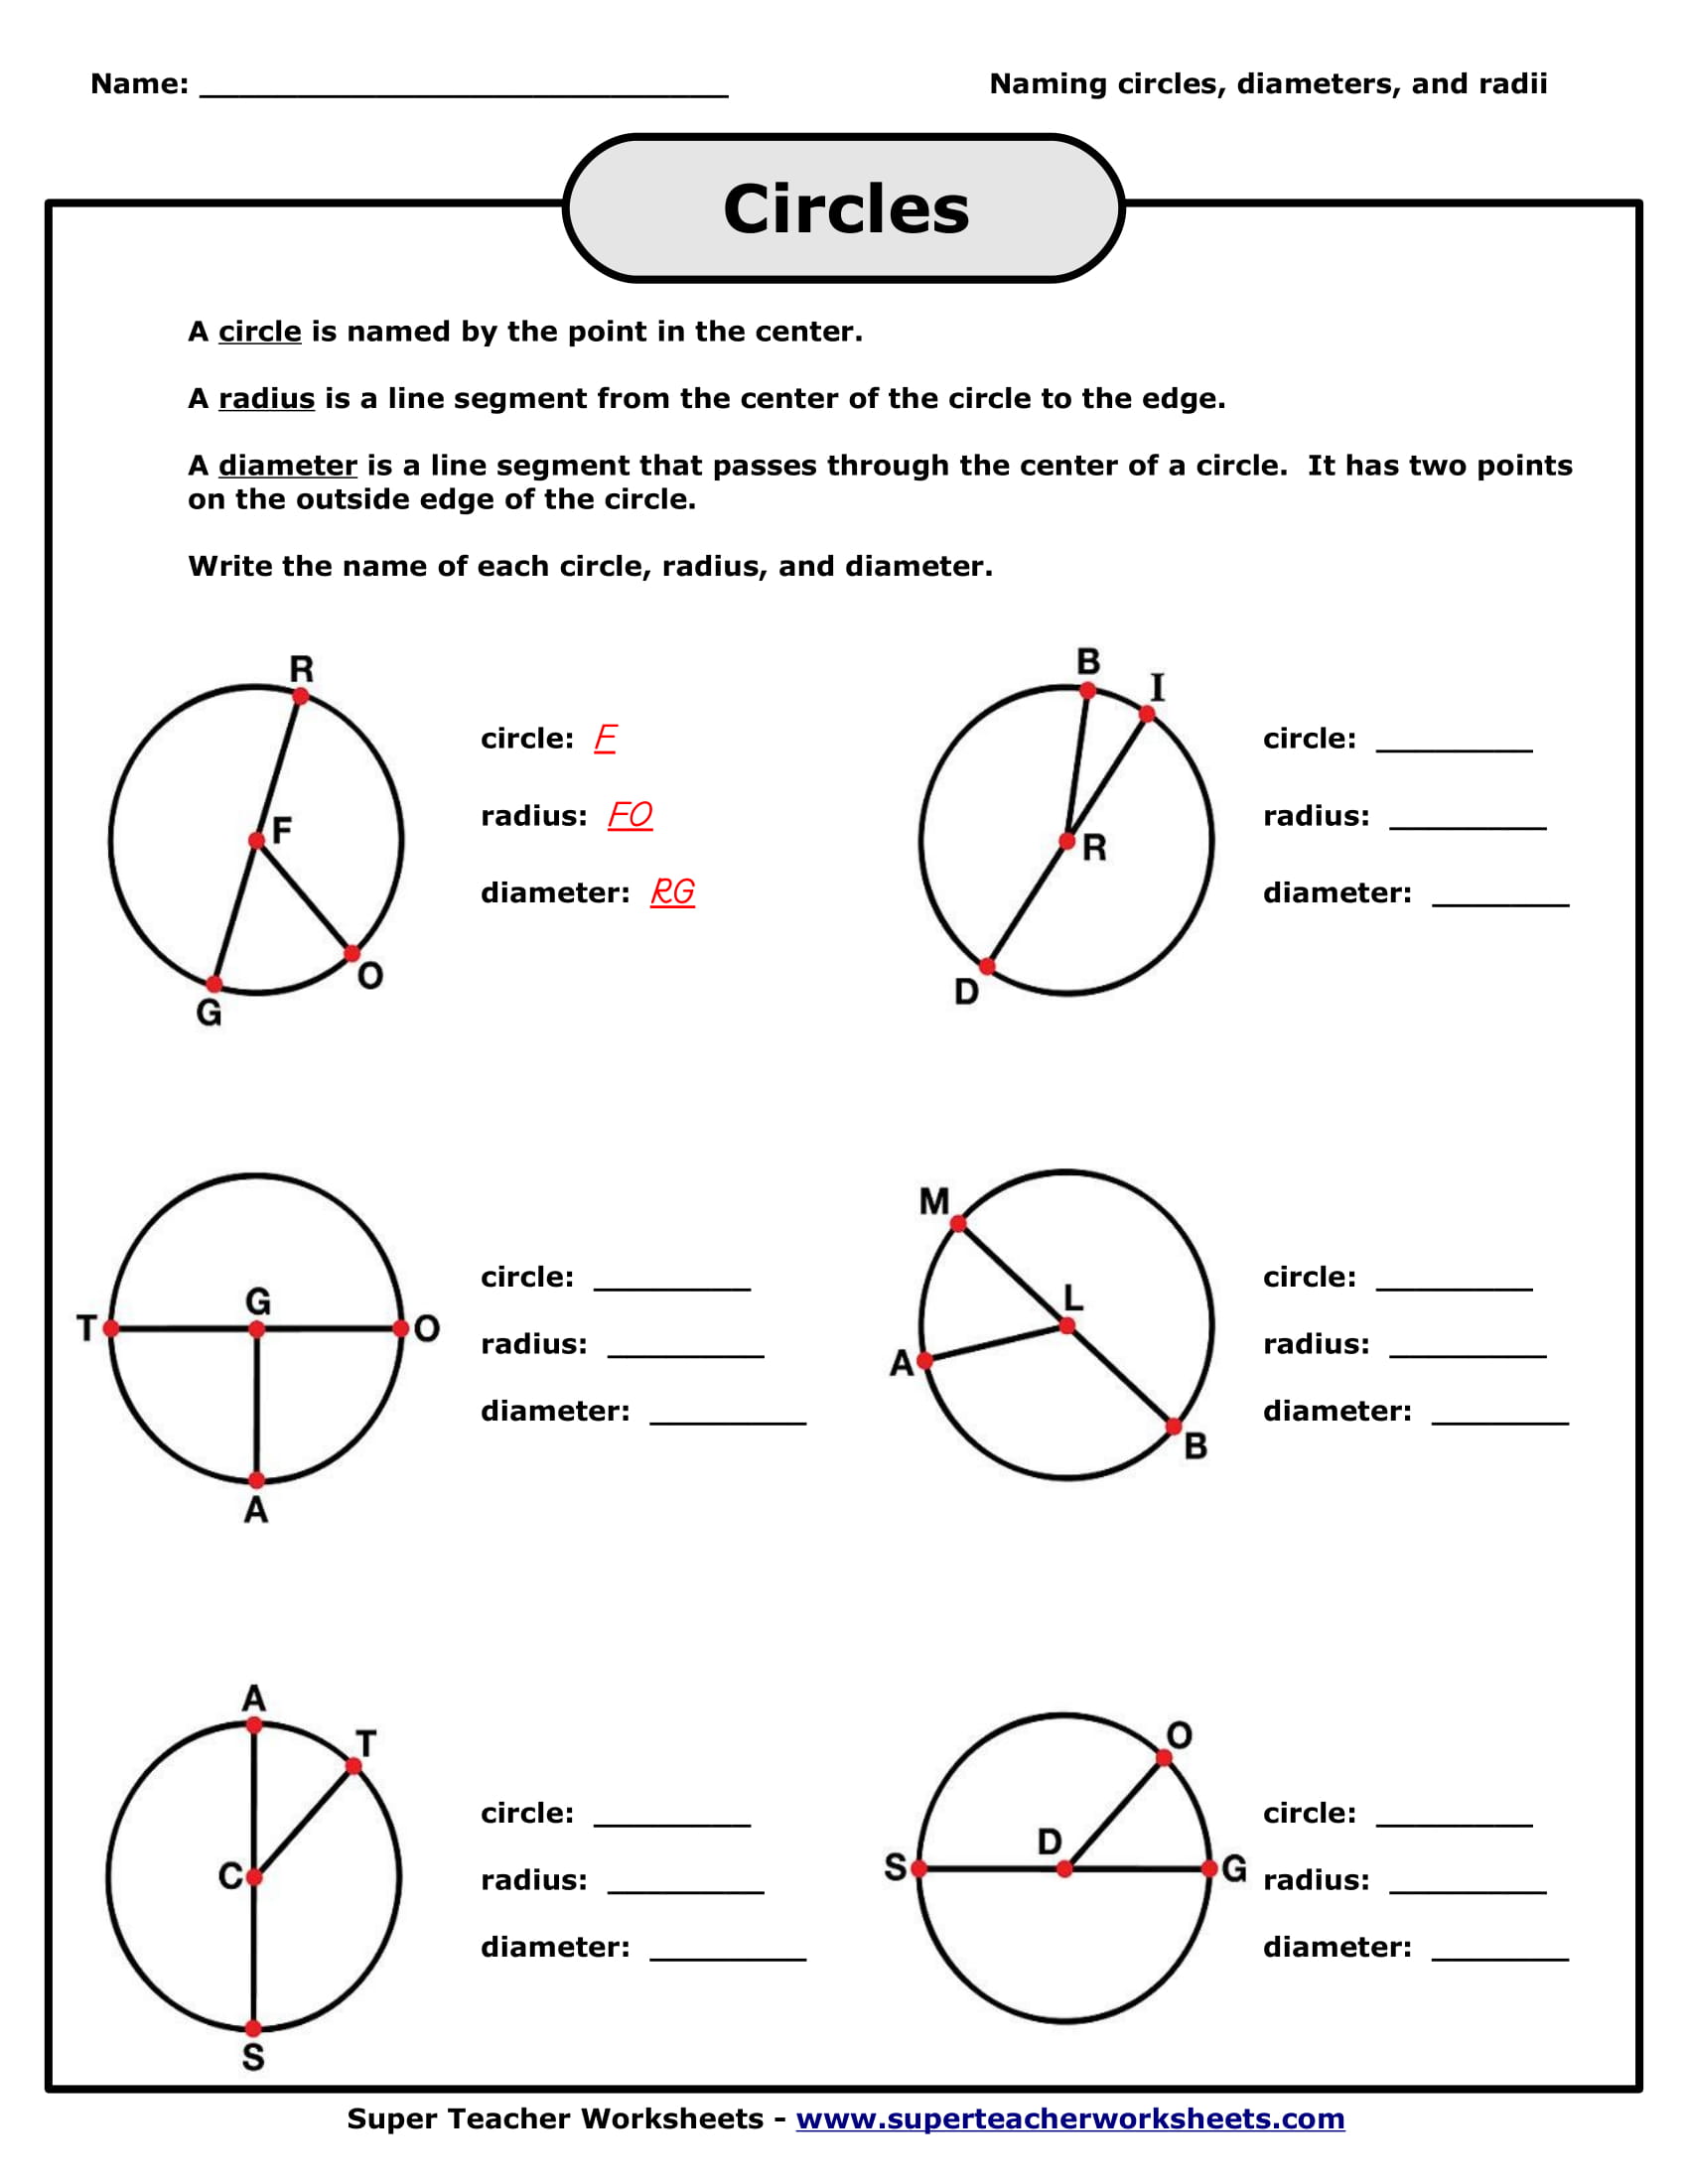 Circle radius. Radius of circle. Diameter of a circle. Radius diameter. Радиус и диаметр.